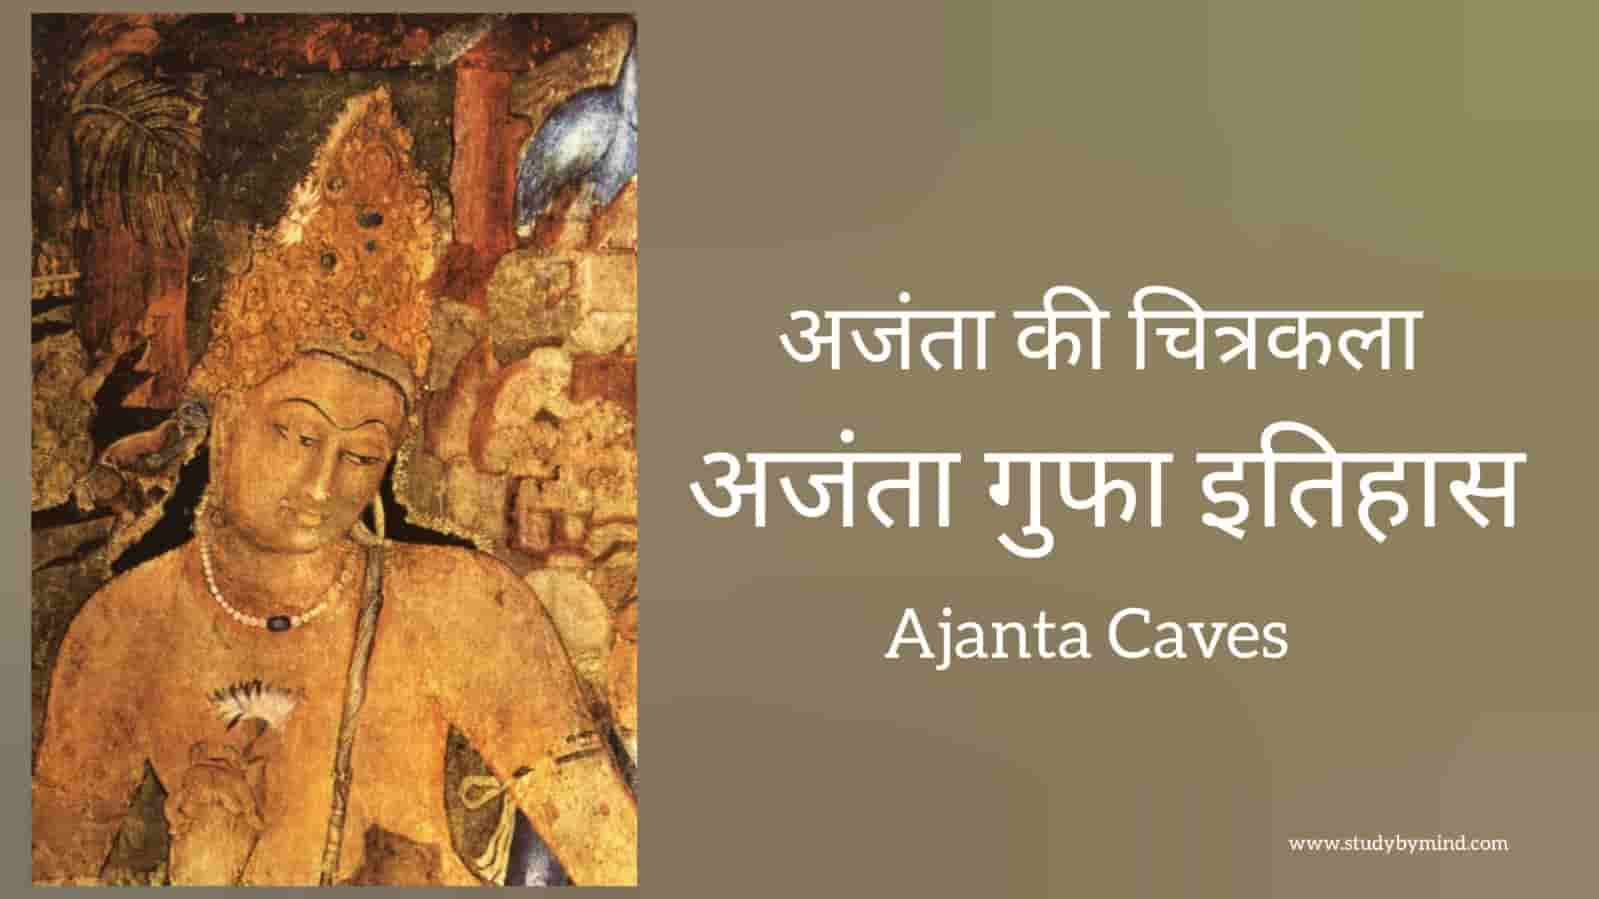 You are currently viewing अजंता की गुफाएं Ajanta caves in hindi (अजंता की चित्रकला)